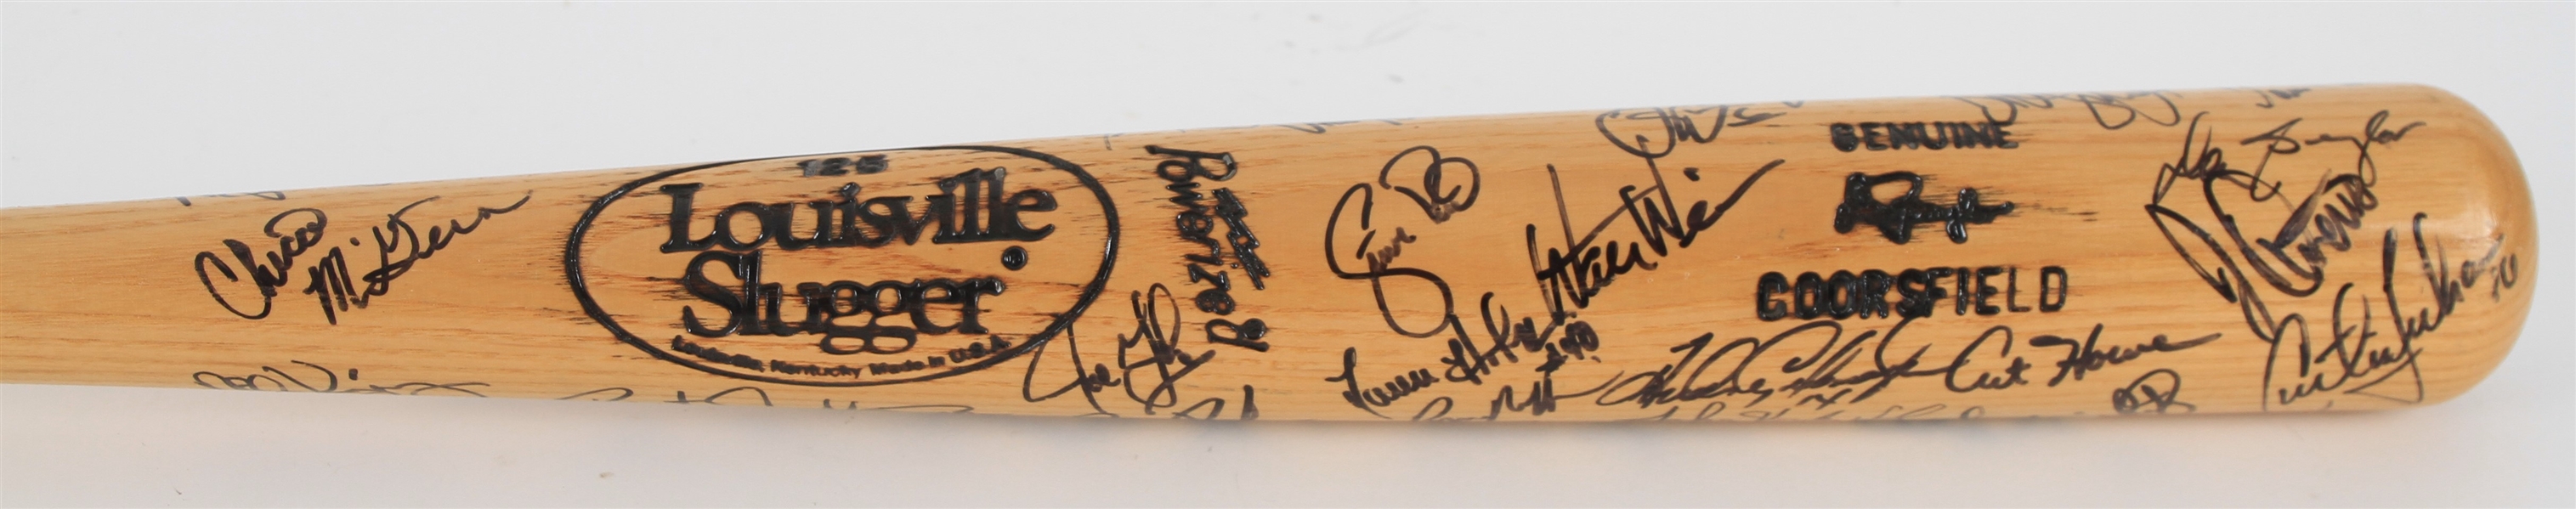 1995 Colorado Rockies Team Signed Louisville Slugger Bat w/ 30+ Signatures Including Don Baylor, Andres Galarraga, Vinny Castilla, Ellis Burks & More (JSA)